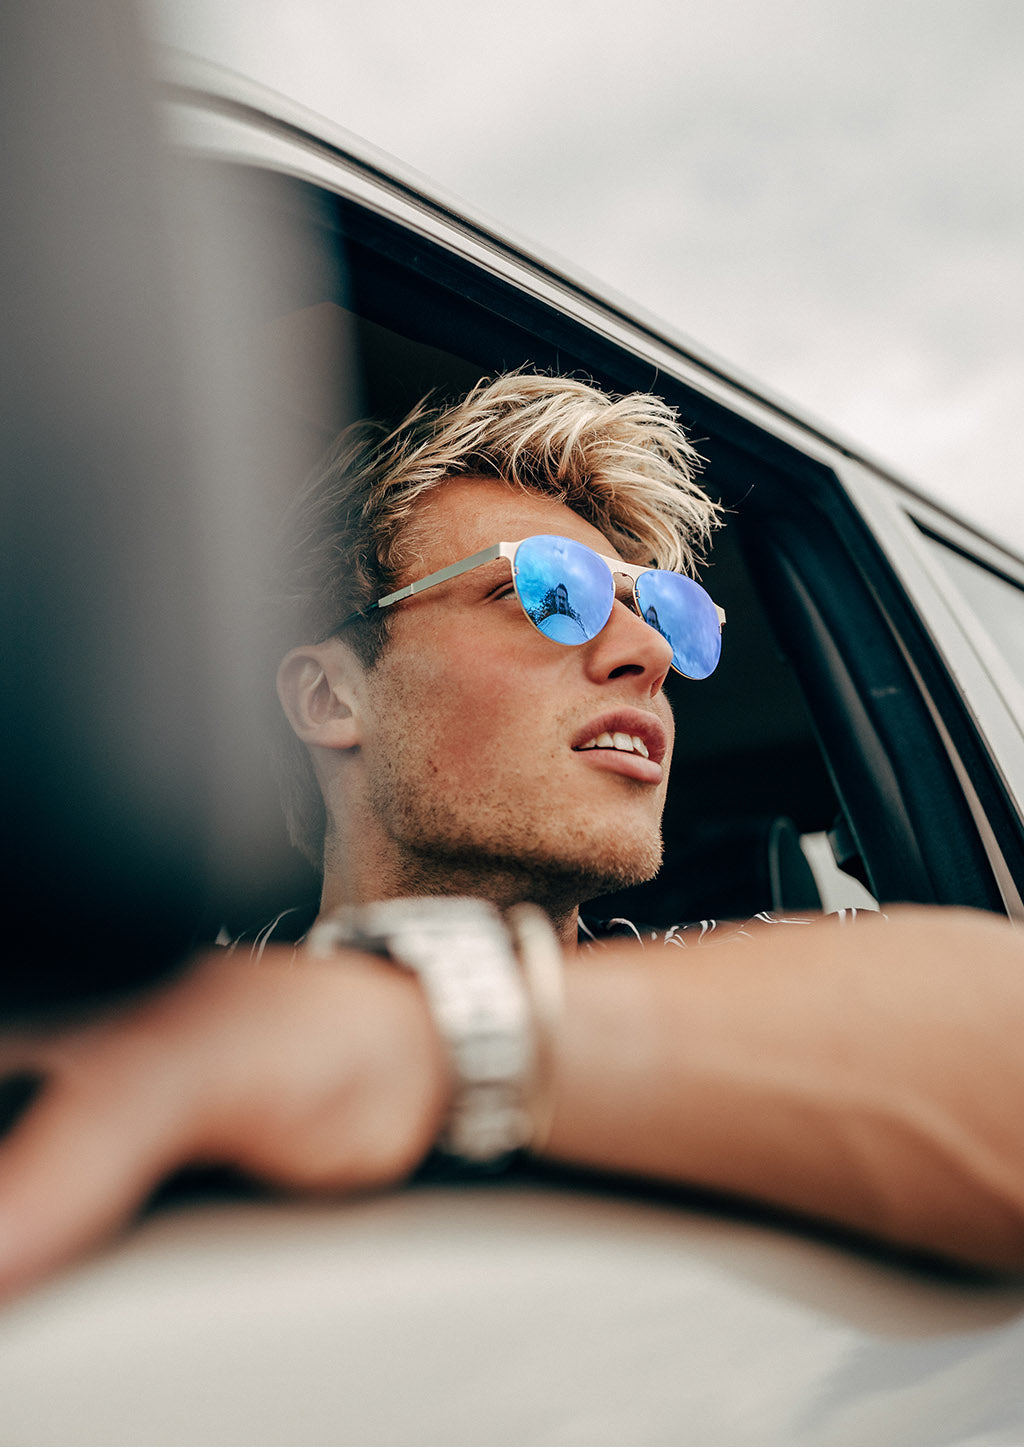 Foldable sunglasses - Scout classic aviator design - Photo on model in car